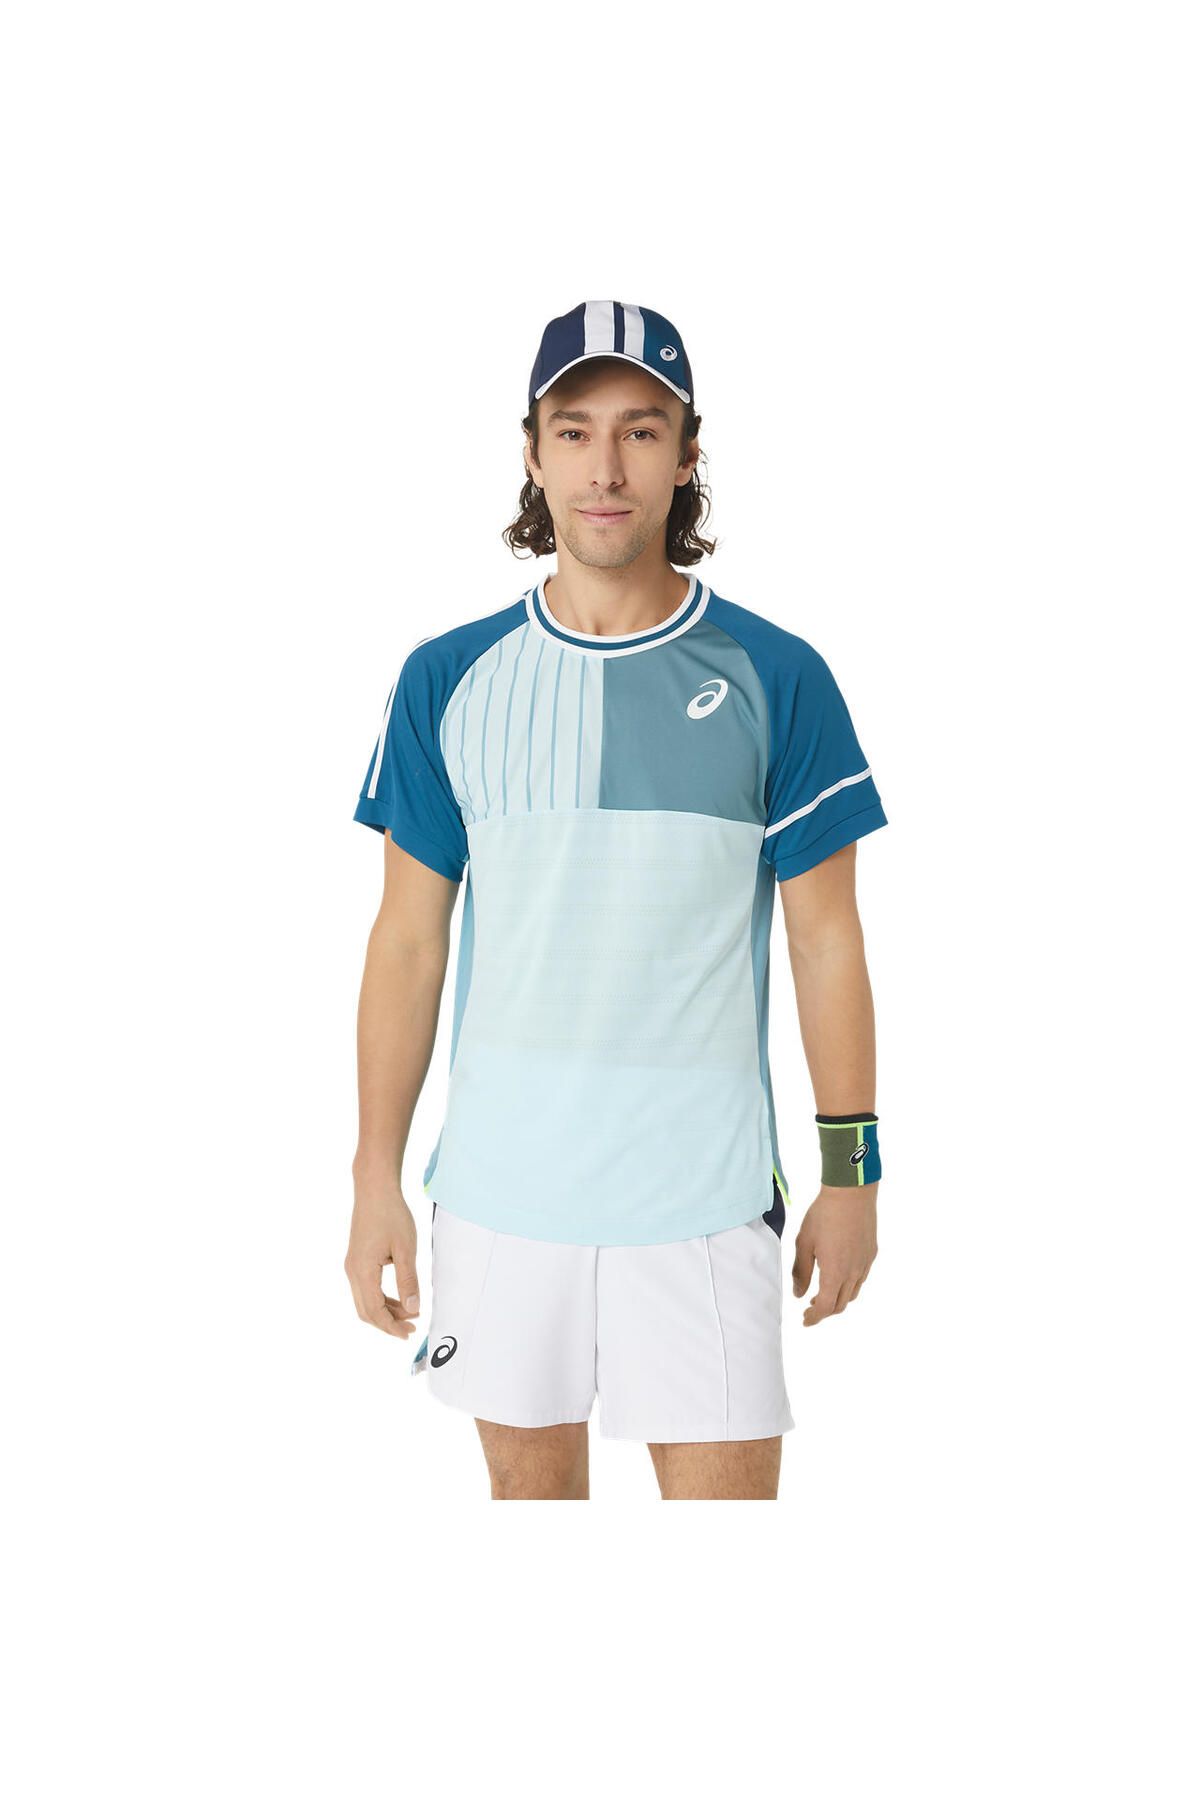 Asics Match Ss Top Erkek Mavi Kısa Kollu Tshirt 2041a271-405